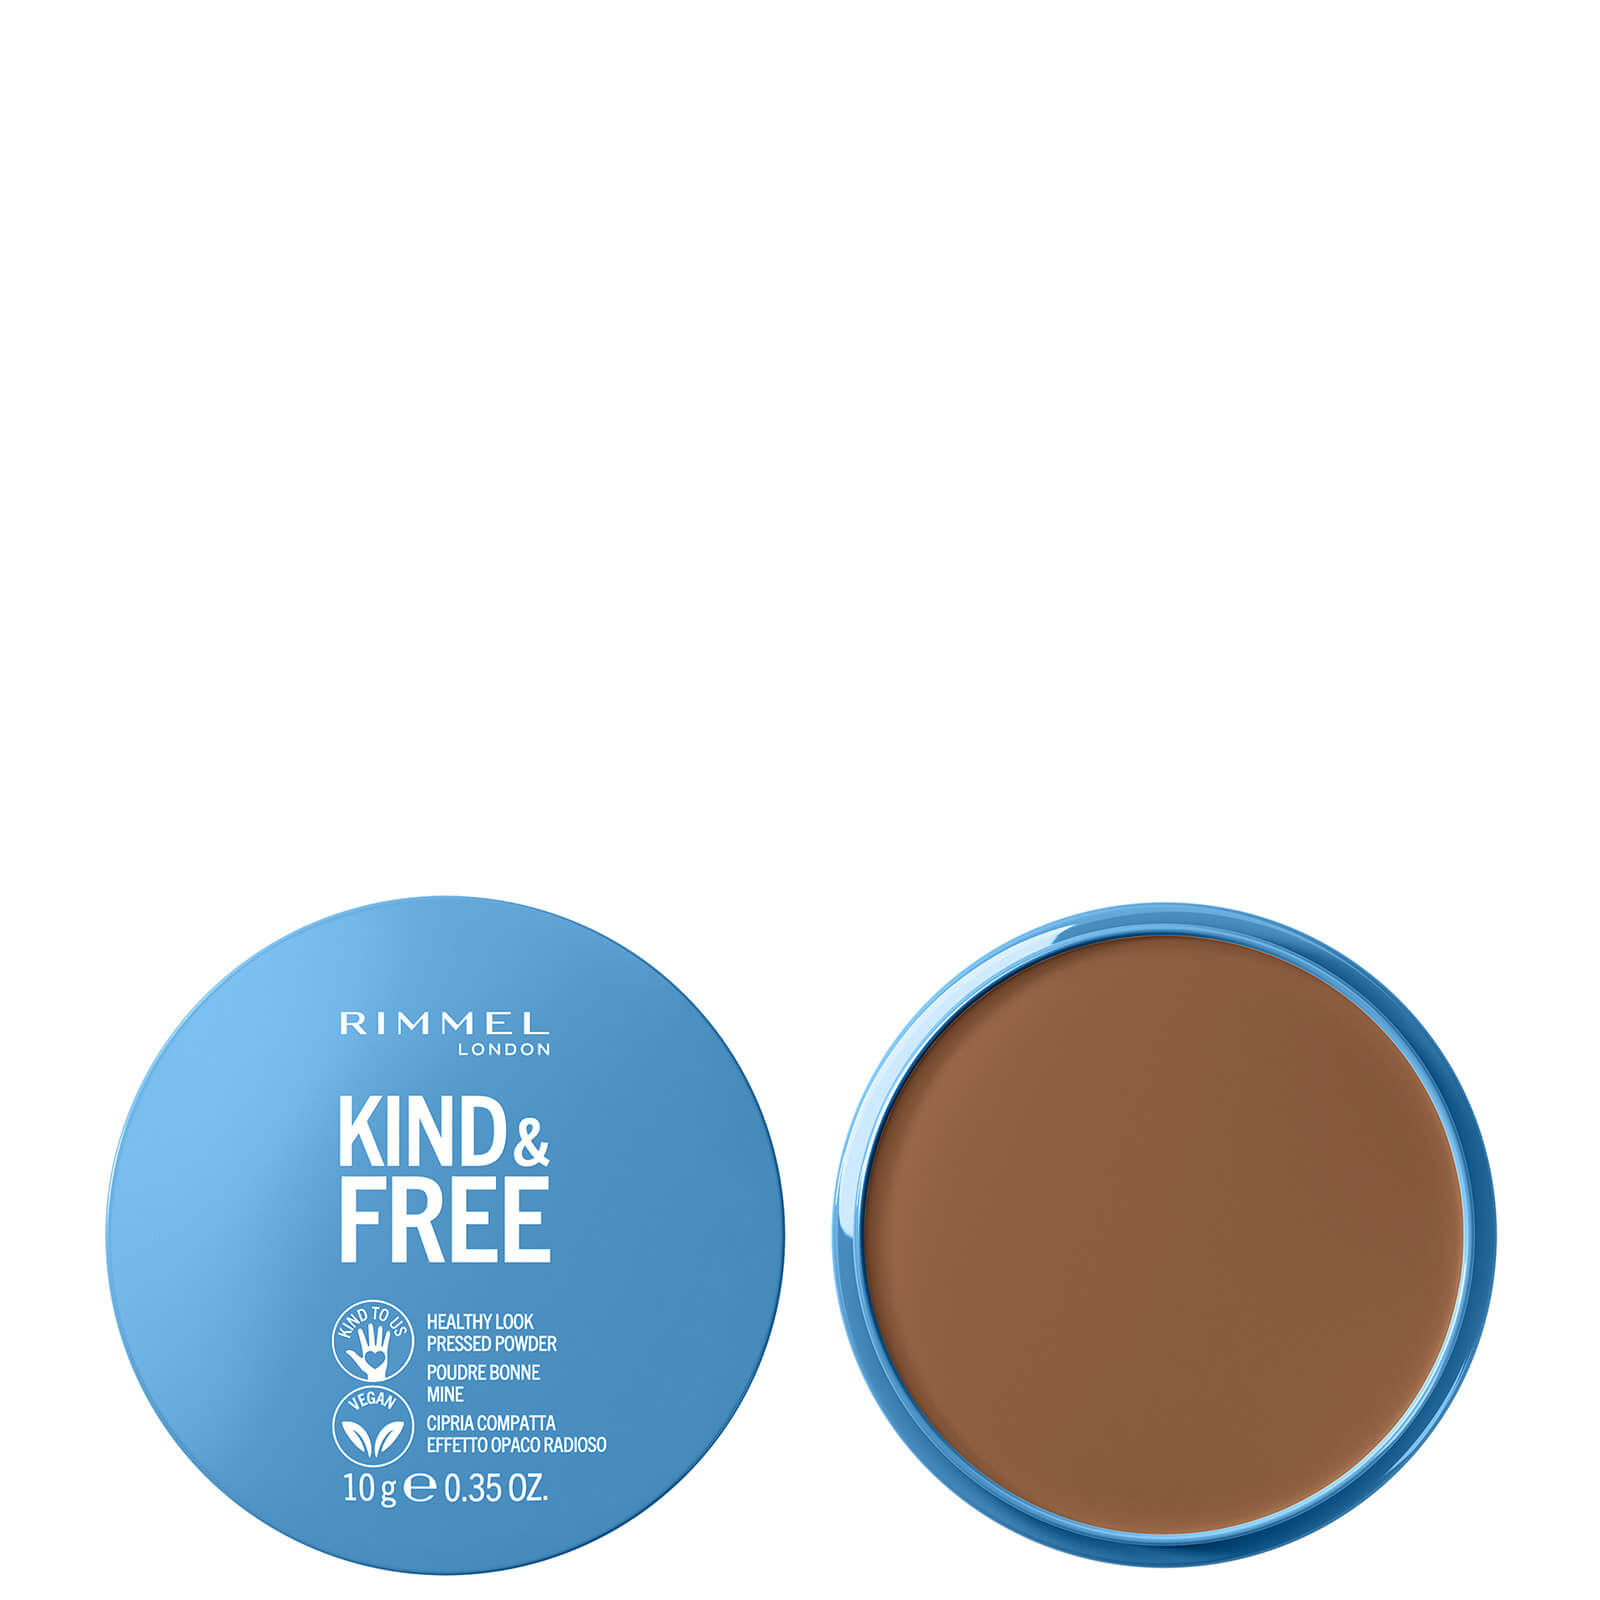 Rimmel Kind and Free Pressed Powder 10g (Various Shades) - Deep